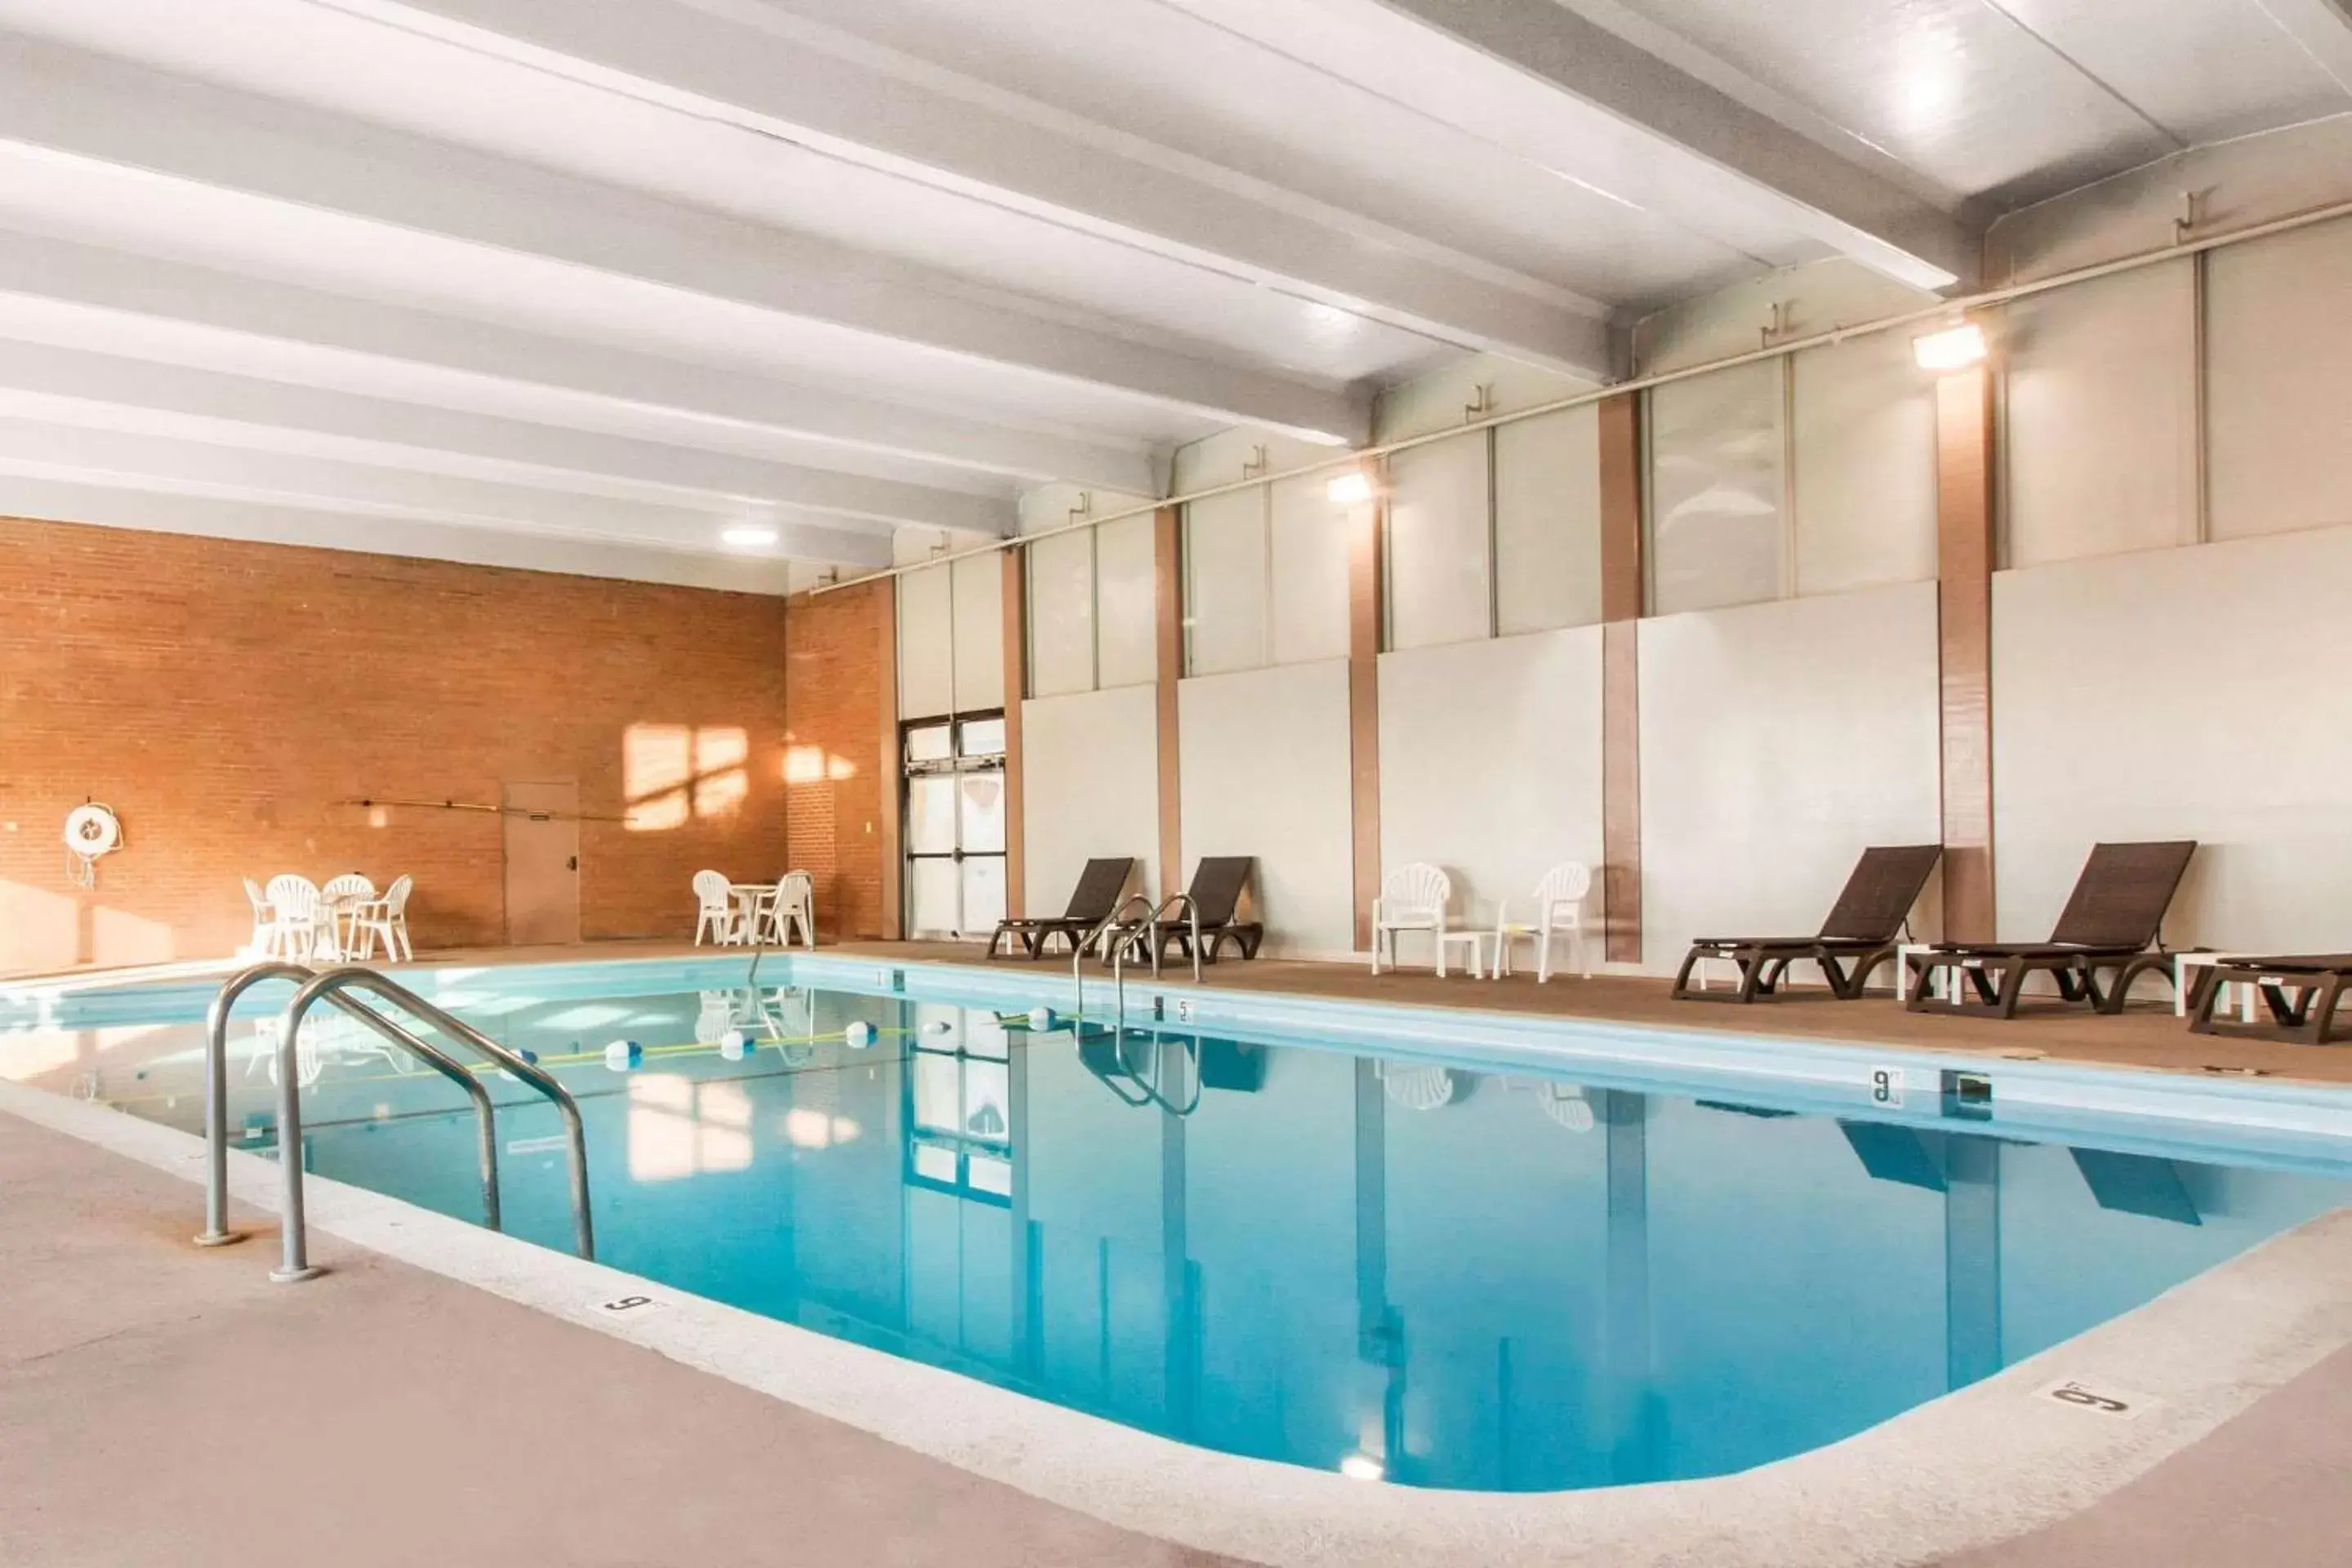 On site, Swimming Pool in Comfort Inn & Suites Omaha